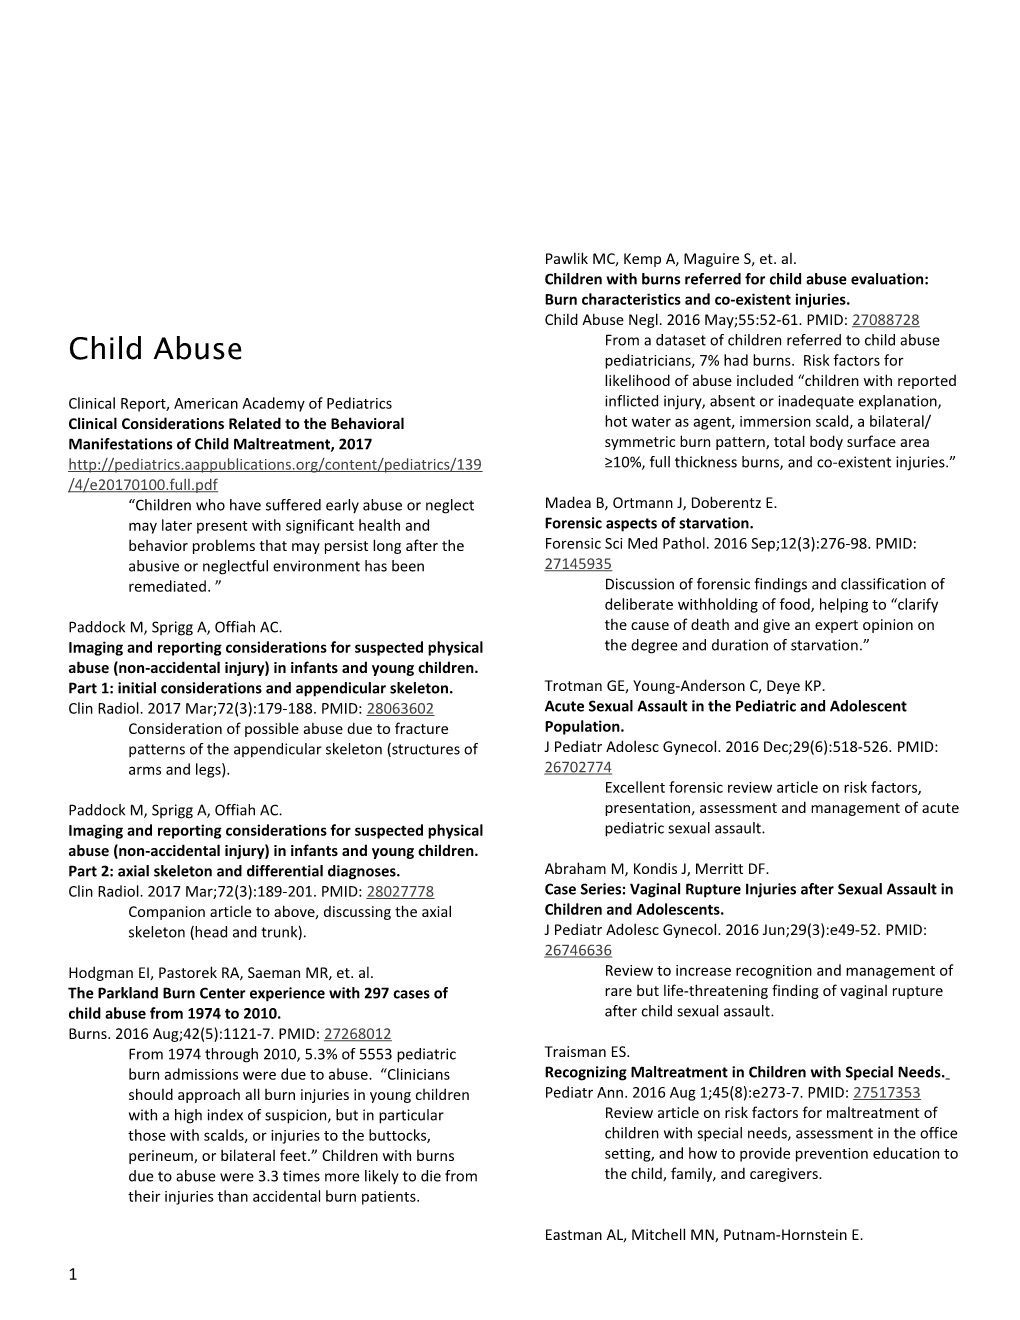 Clinical Report, American Academy of Pediatrics